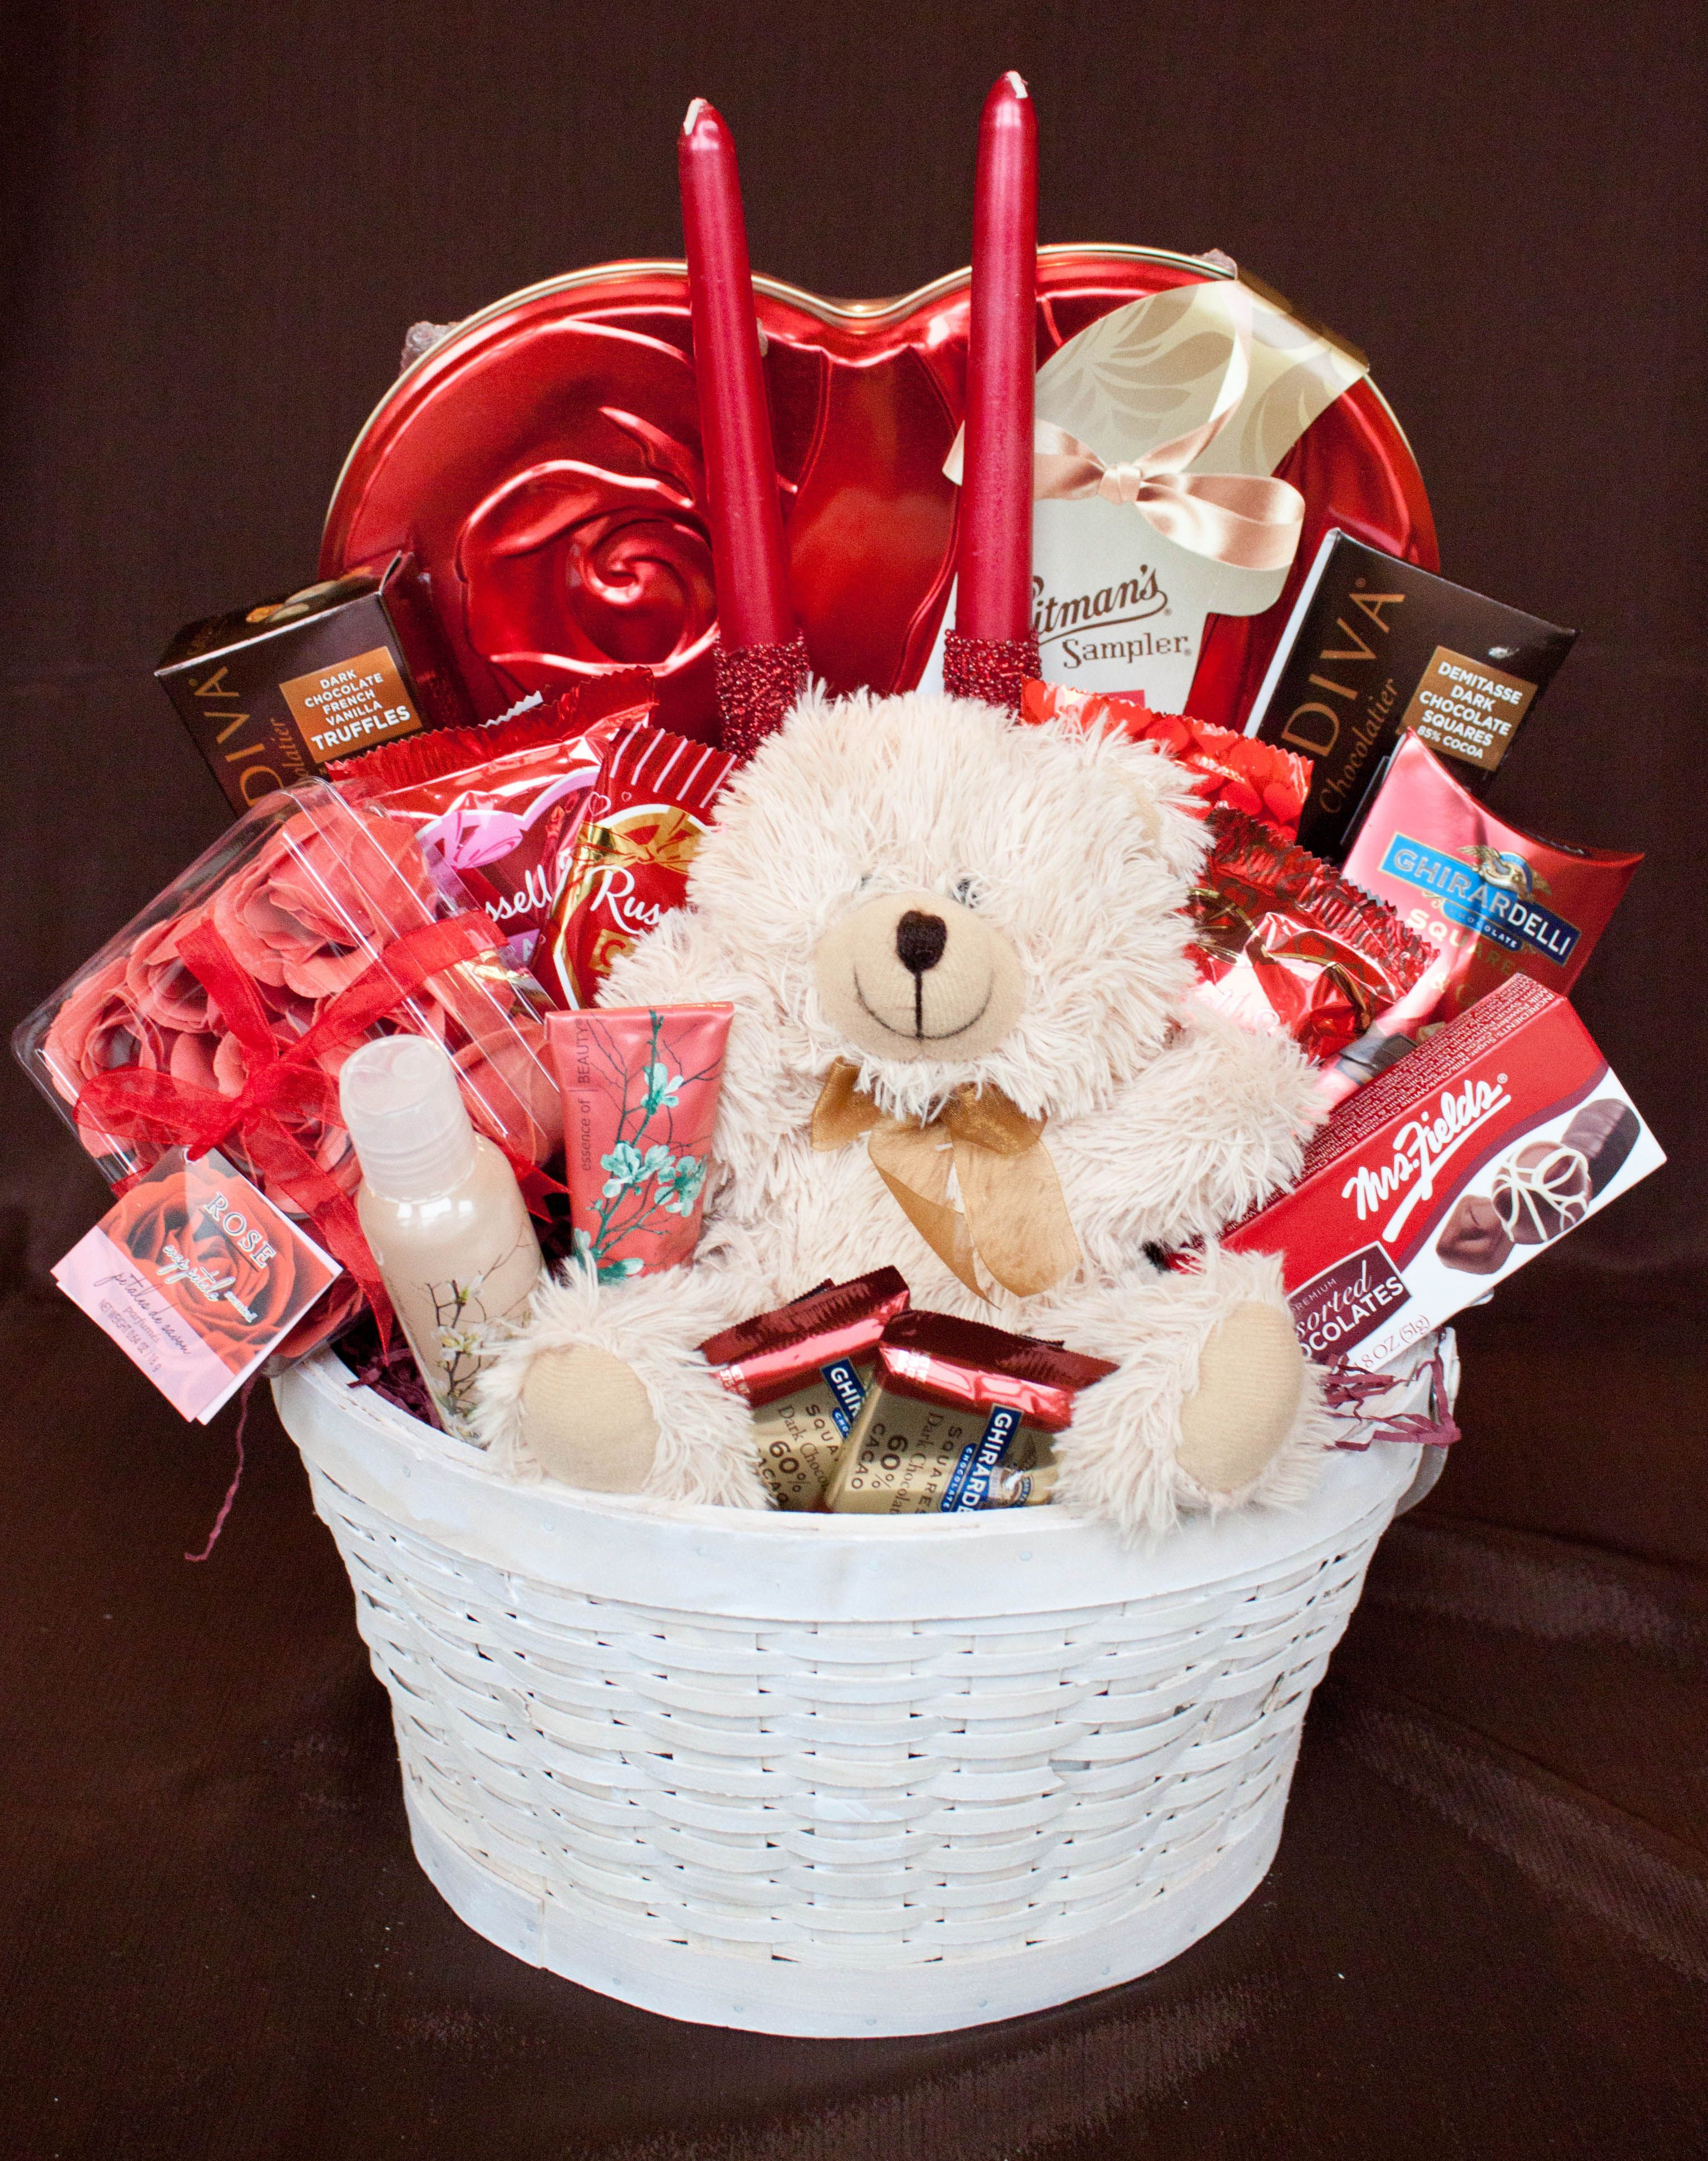 Best ideas about Valentine Gift Basket Ideas
. Save or Pin Valentine Basket Something Wonderful Baskets Now.